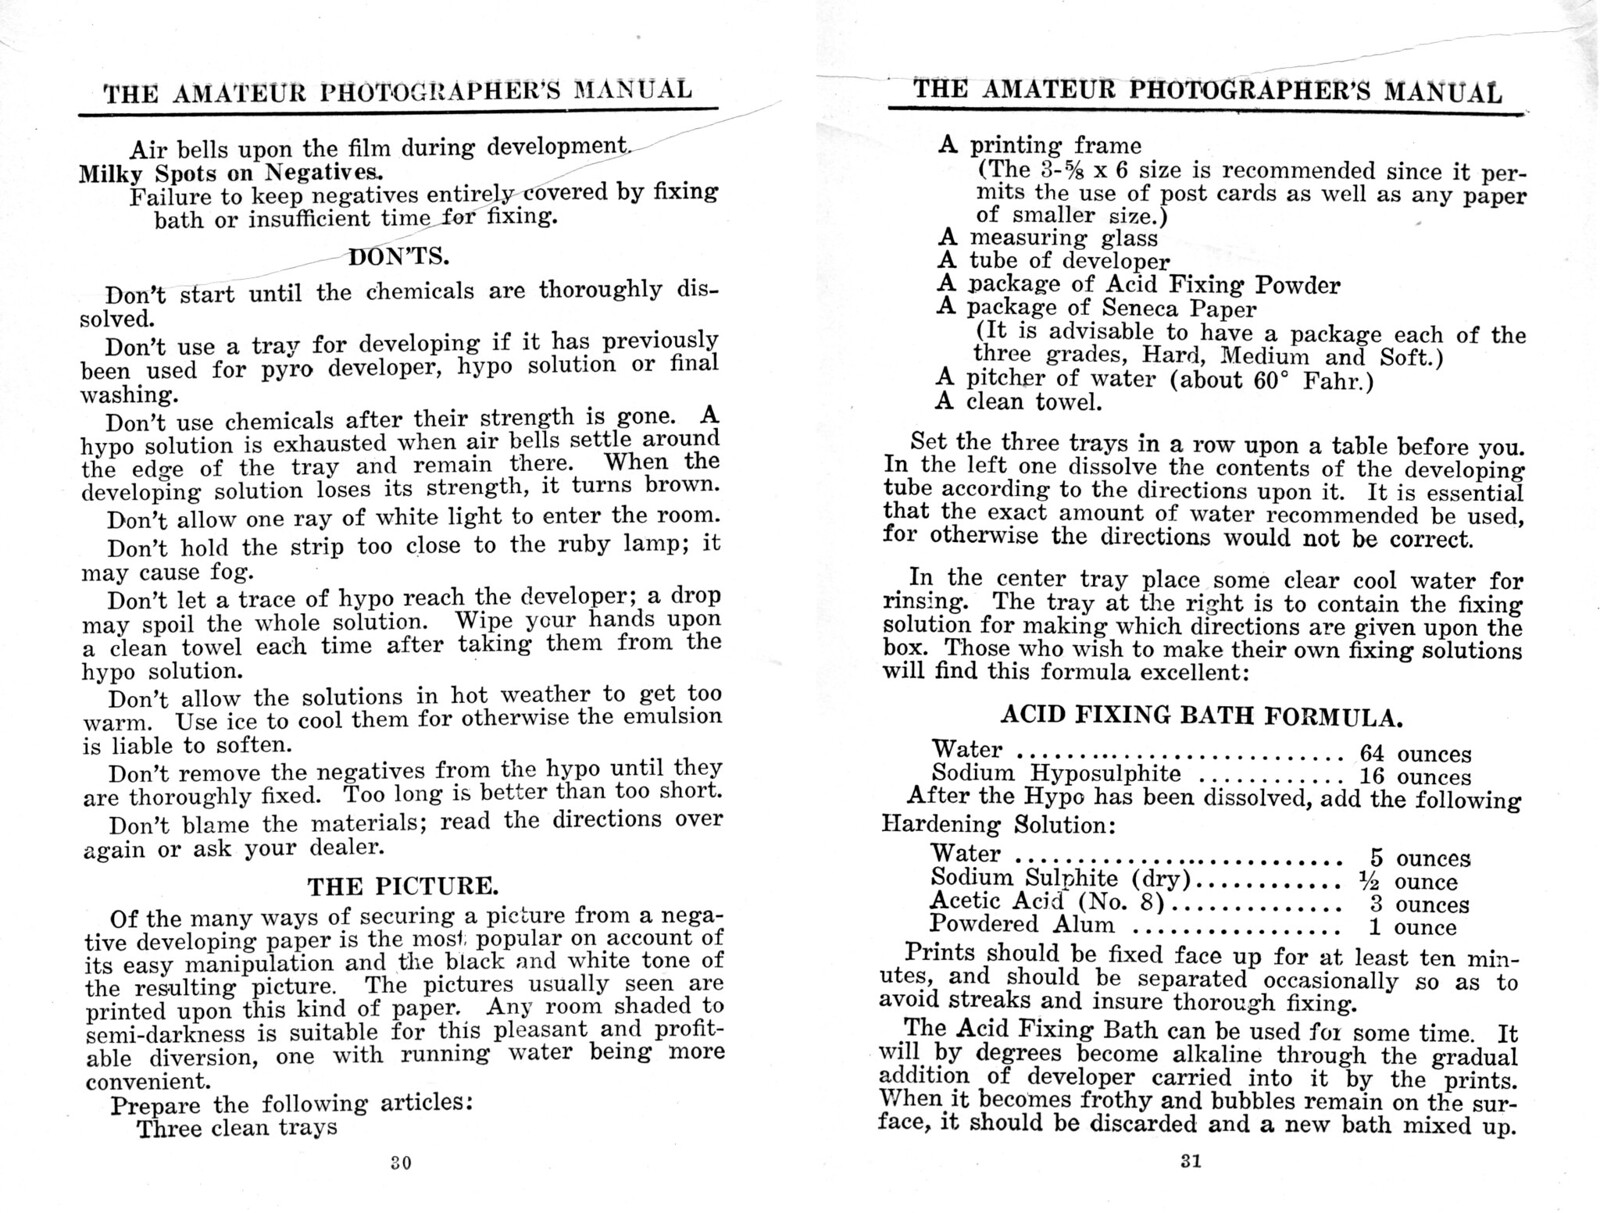 The Amateur Photographer's Manual